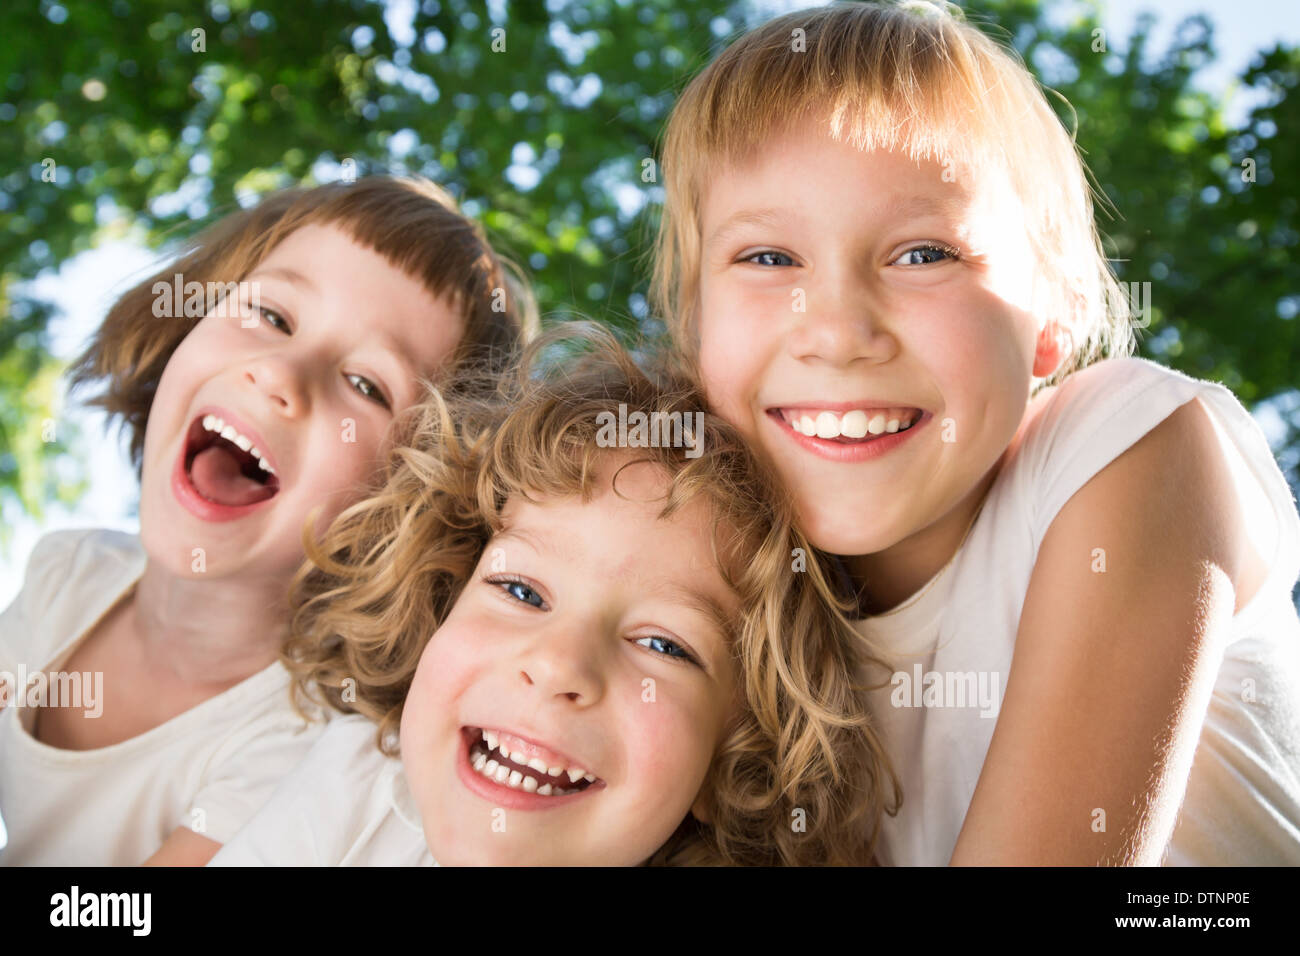 Children having fun outdoors Stock Photo